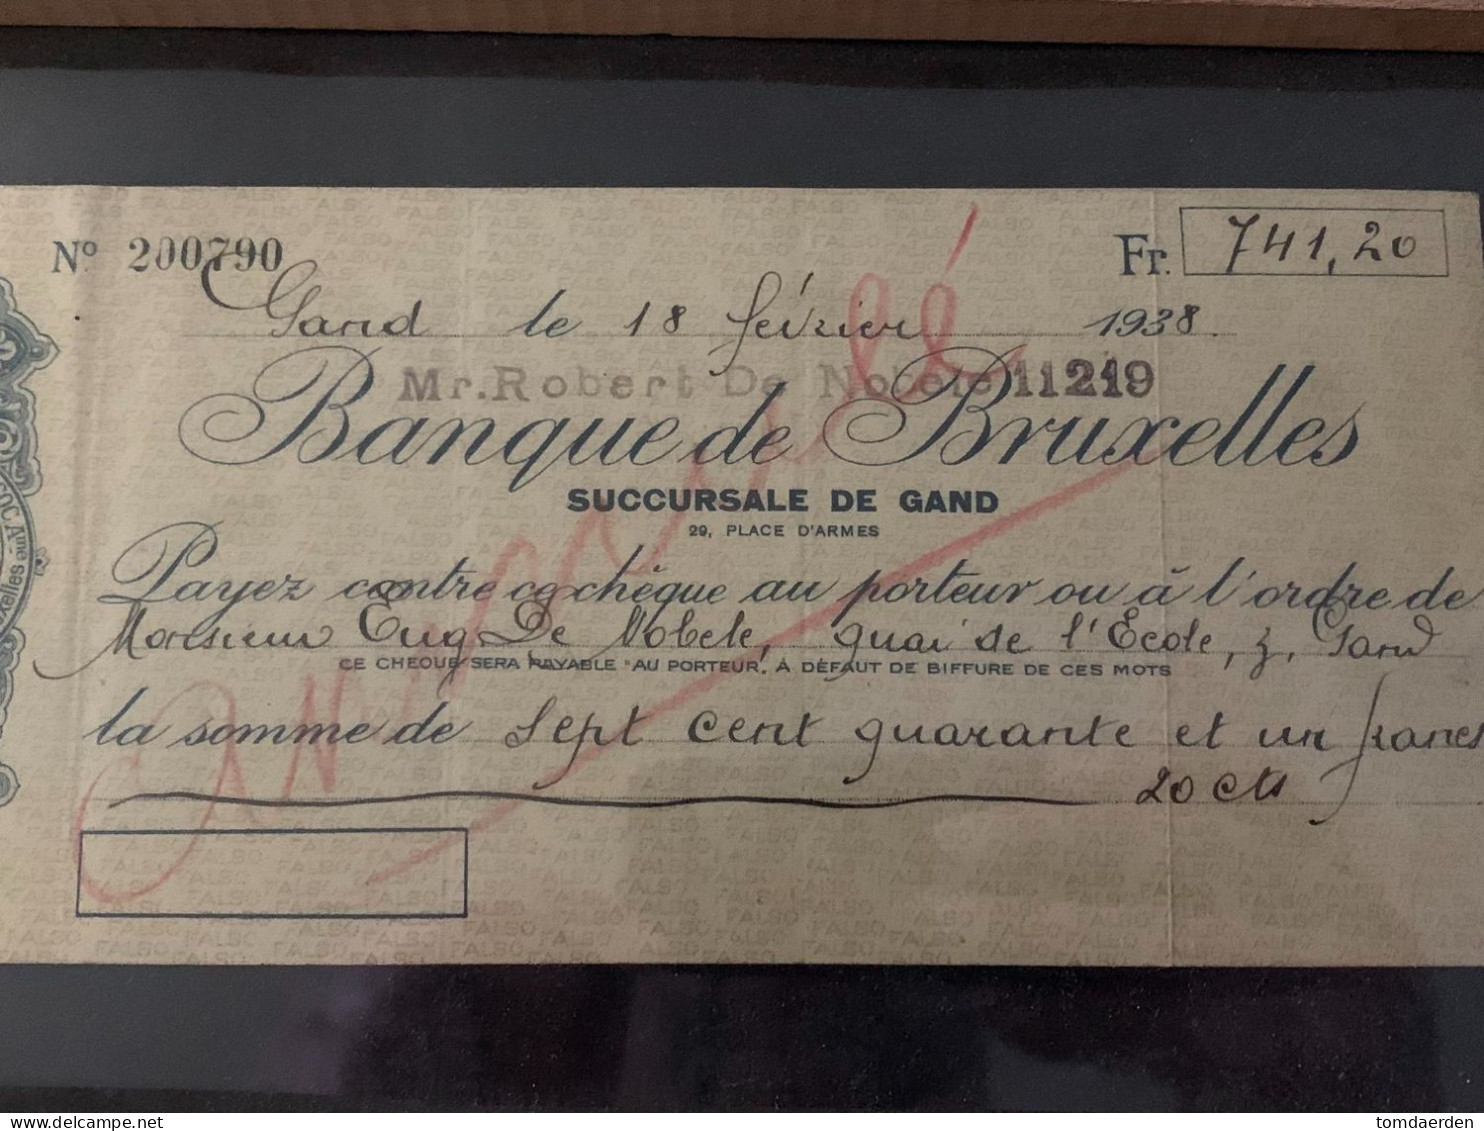 Cheque Banque De Bruxelles Brussel 1938 'Succursale De Gand'  Robert De Nobele 741,20 Frank Franc IN KADER - Lettres De Change